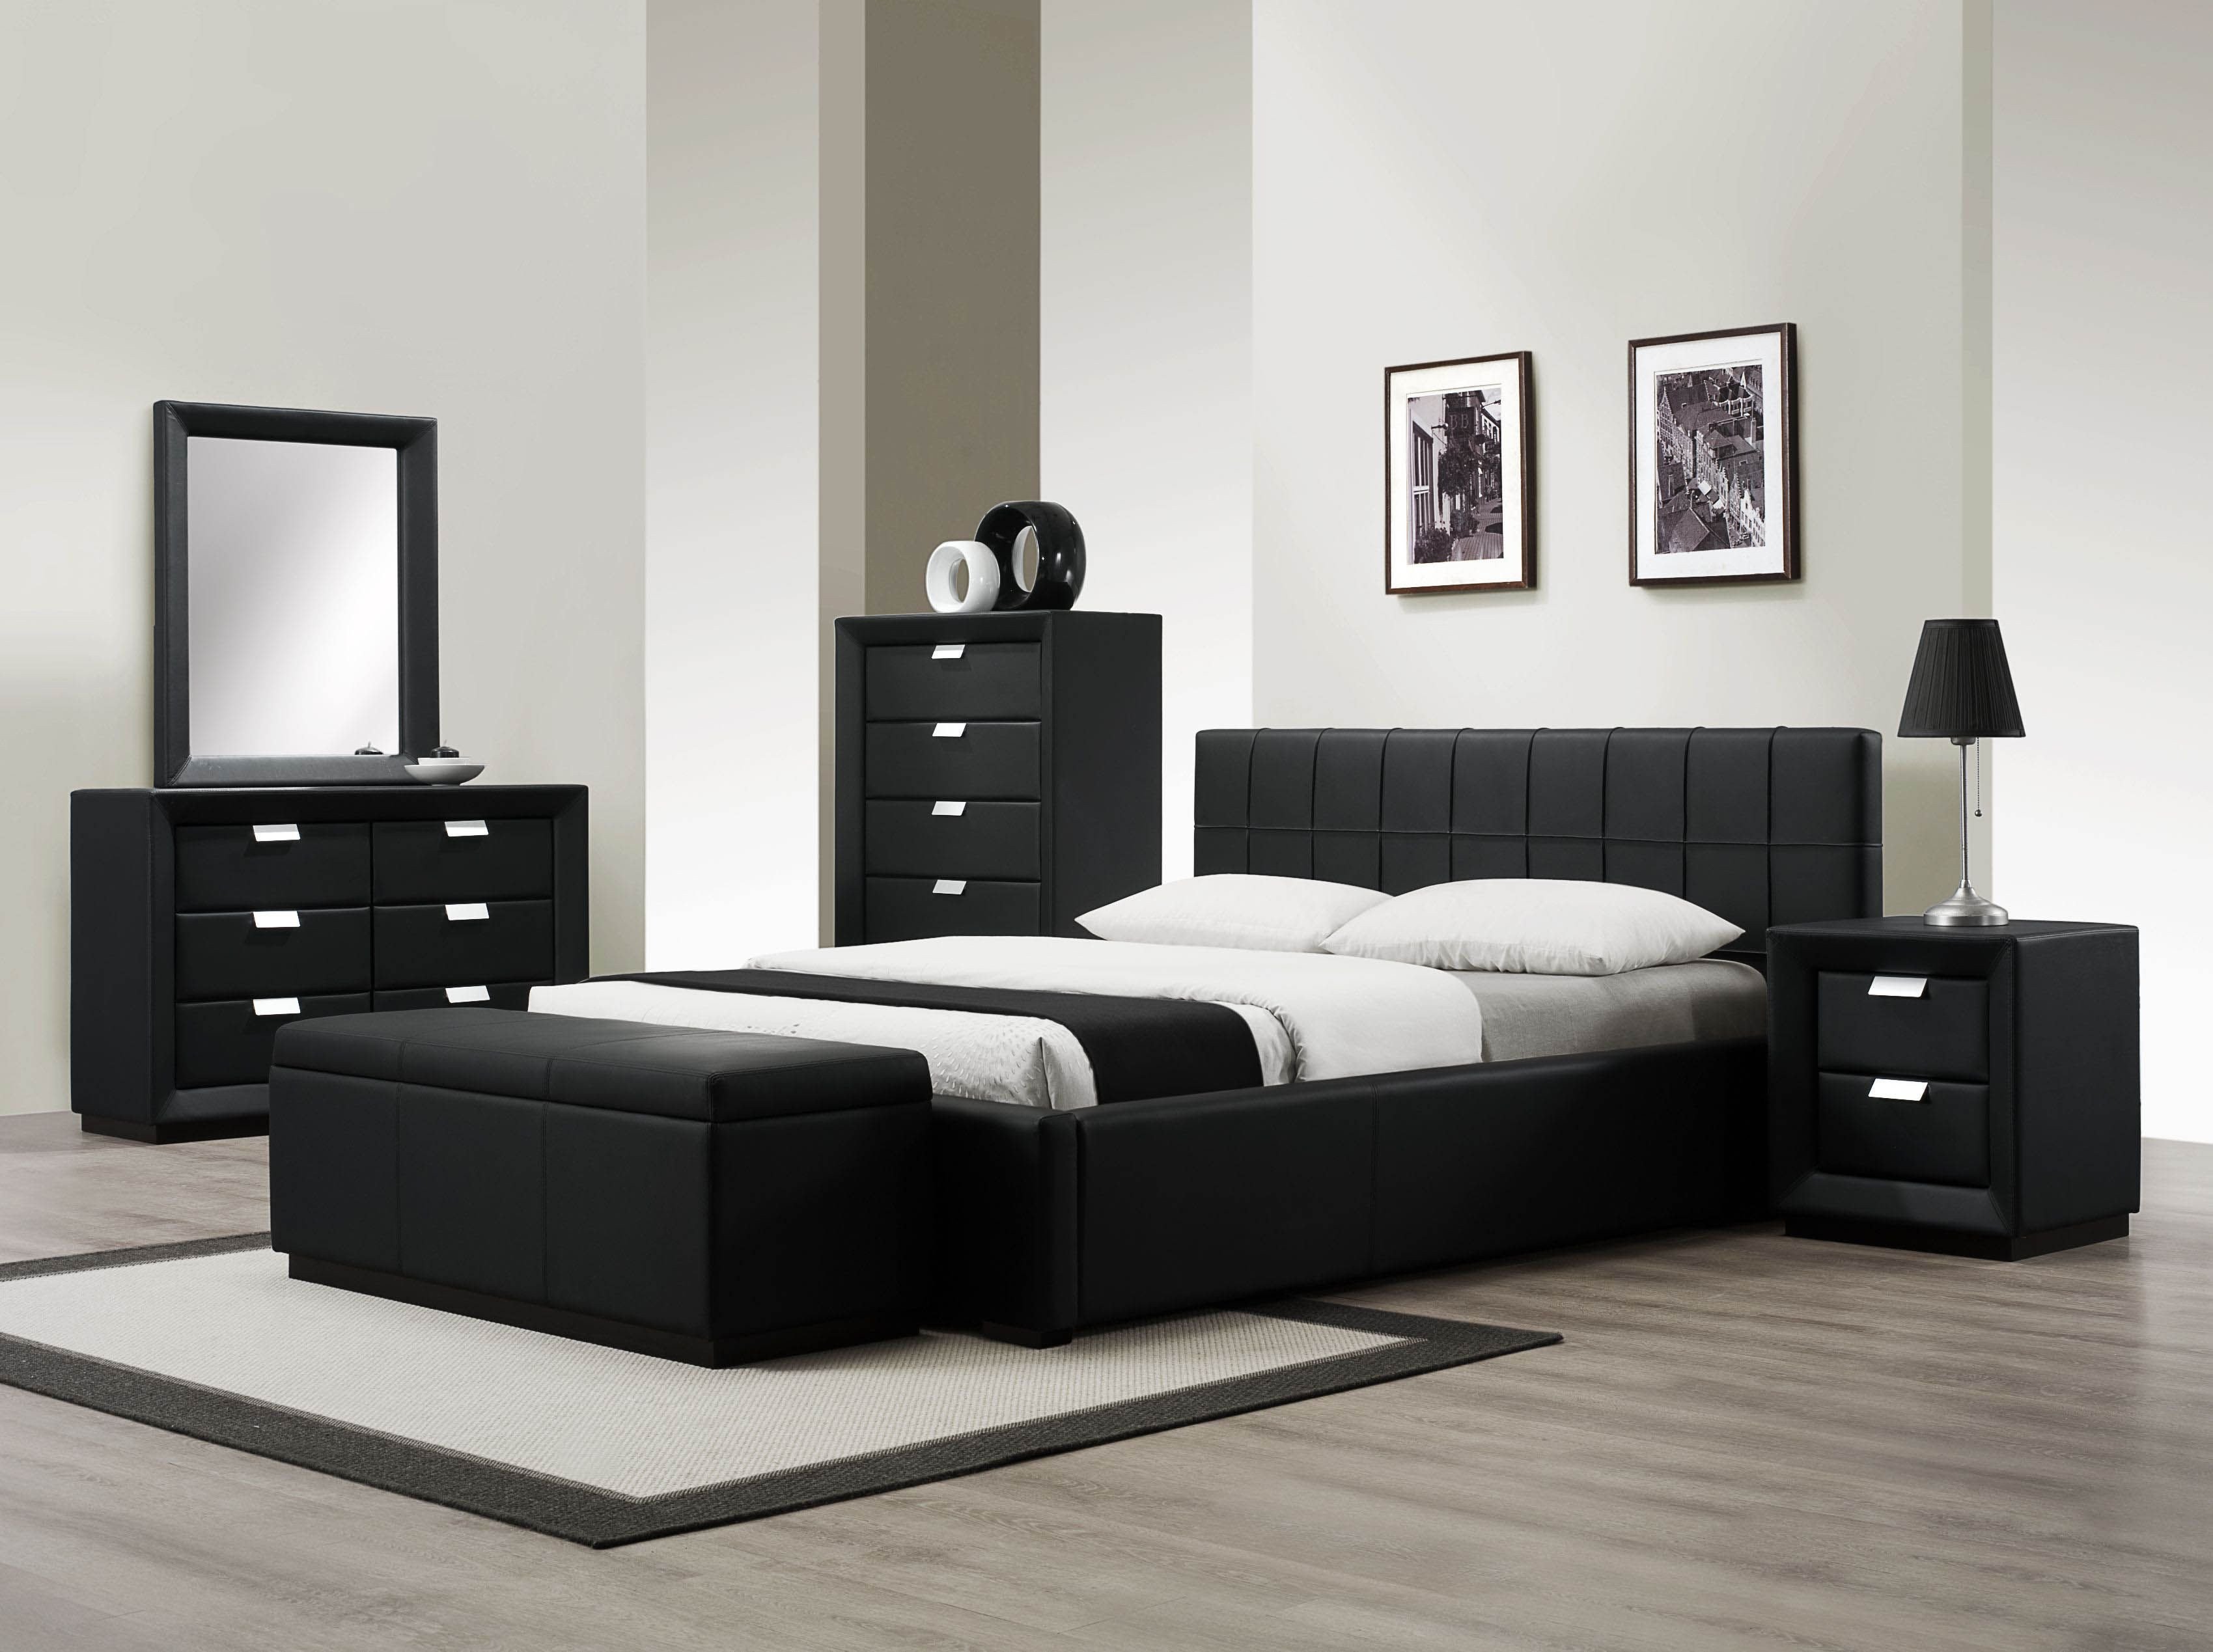 Black Leather Bedroom Set Best Of Masculine Bedroom Ideas Evoking Style Bedroom